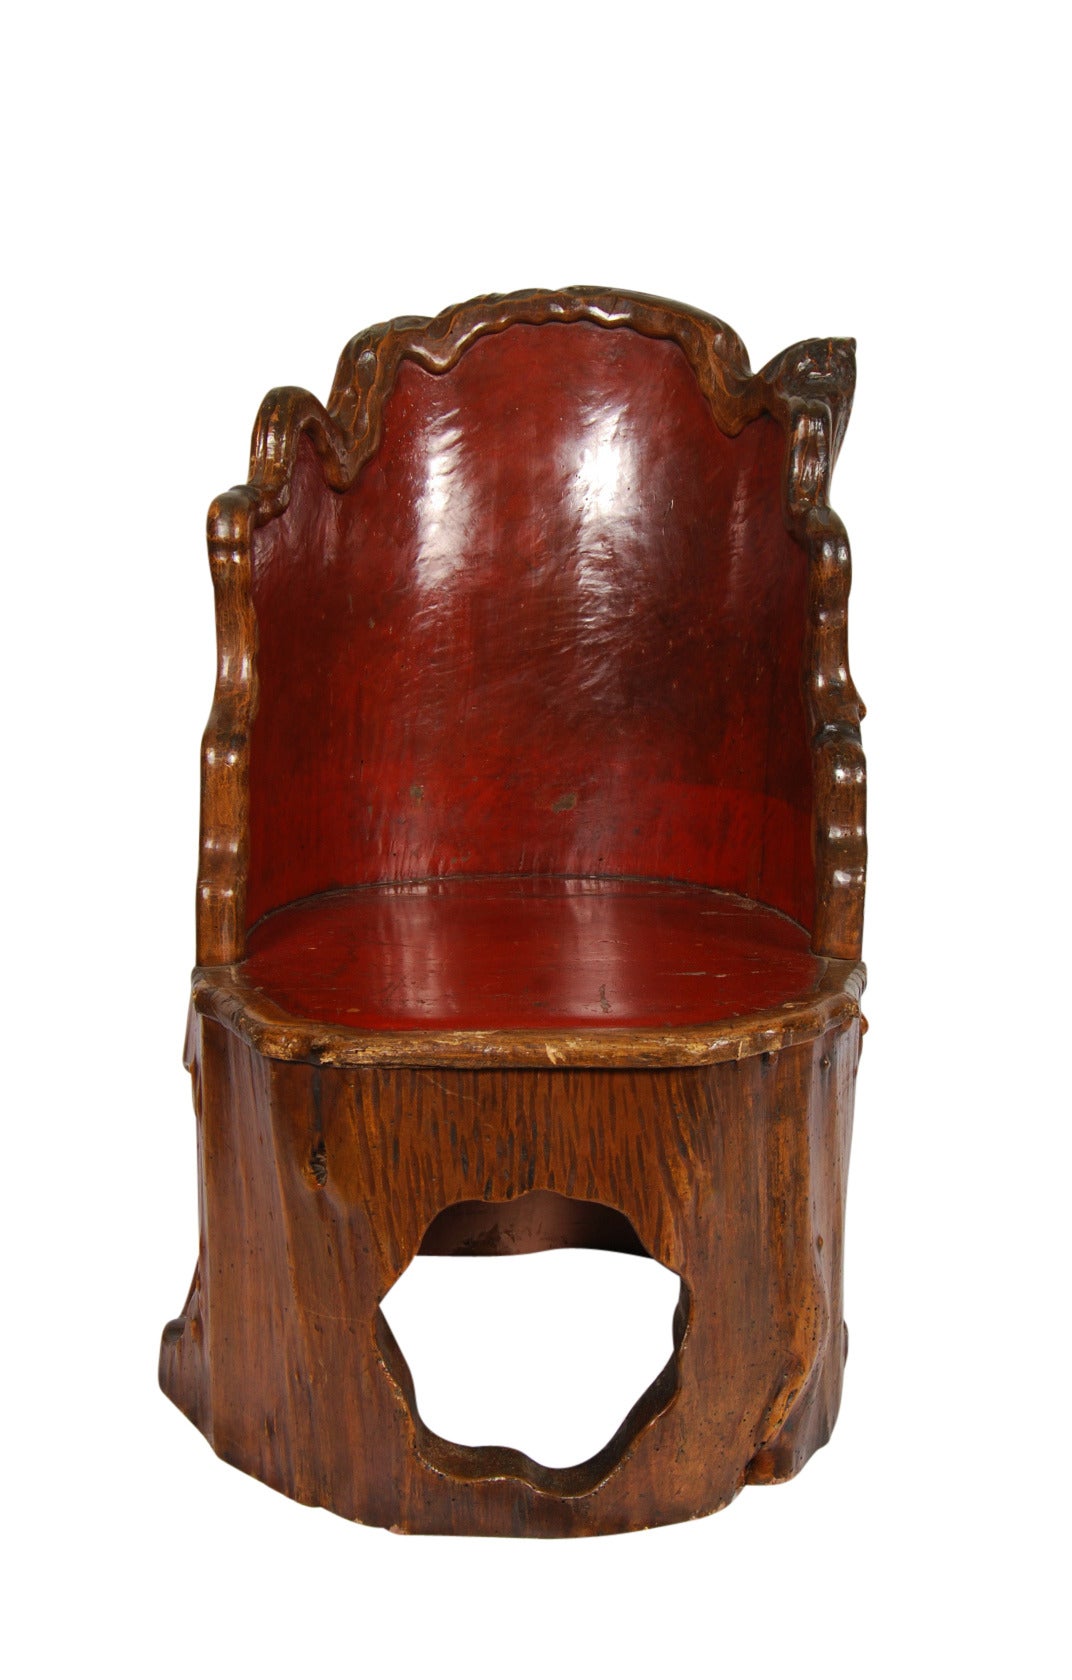 Japanese Mingei (Folk Art) chair. A very rare example made from a section of a cedar tree, 19th century.

Materials: Cedar, lacquer.

Dimensions: H 76cm x W 43cm x D 50cm.